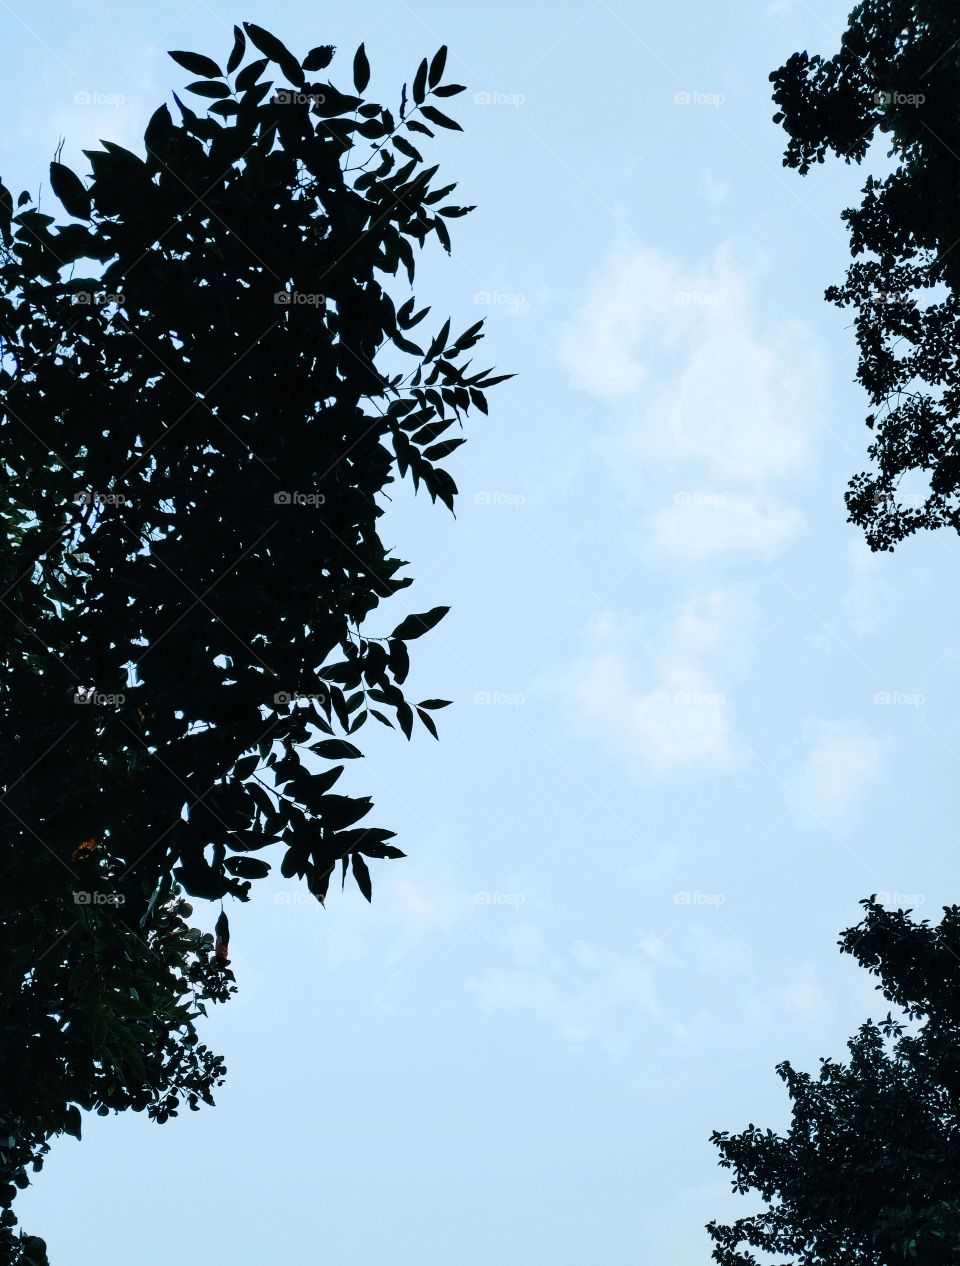 leaf closeup view with sky